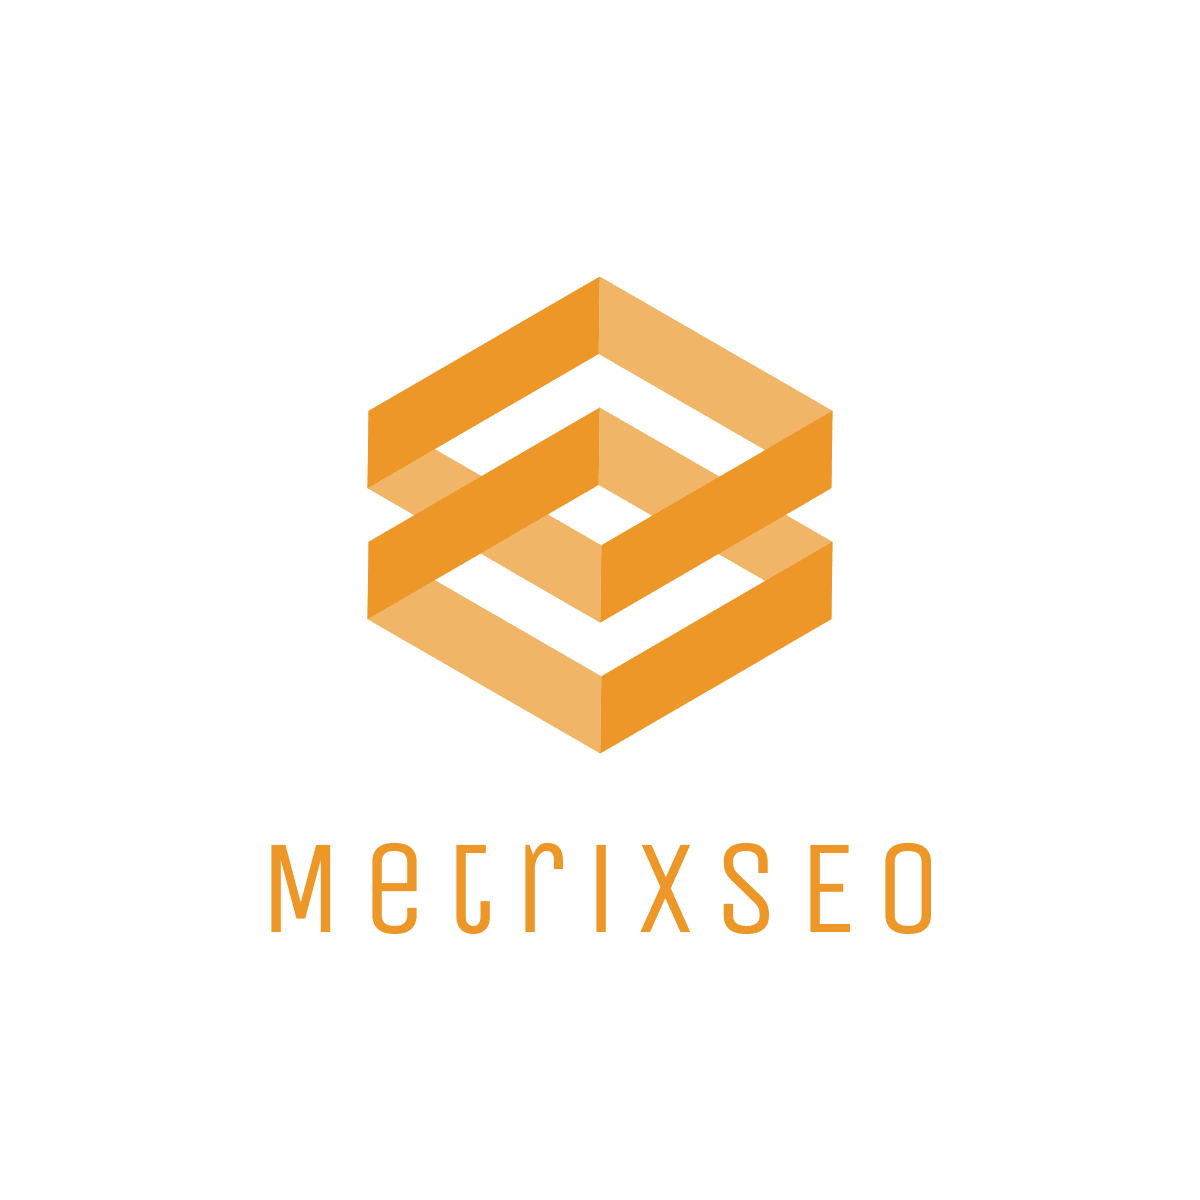 MetrixSEO Ltd - SEO Services